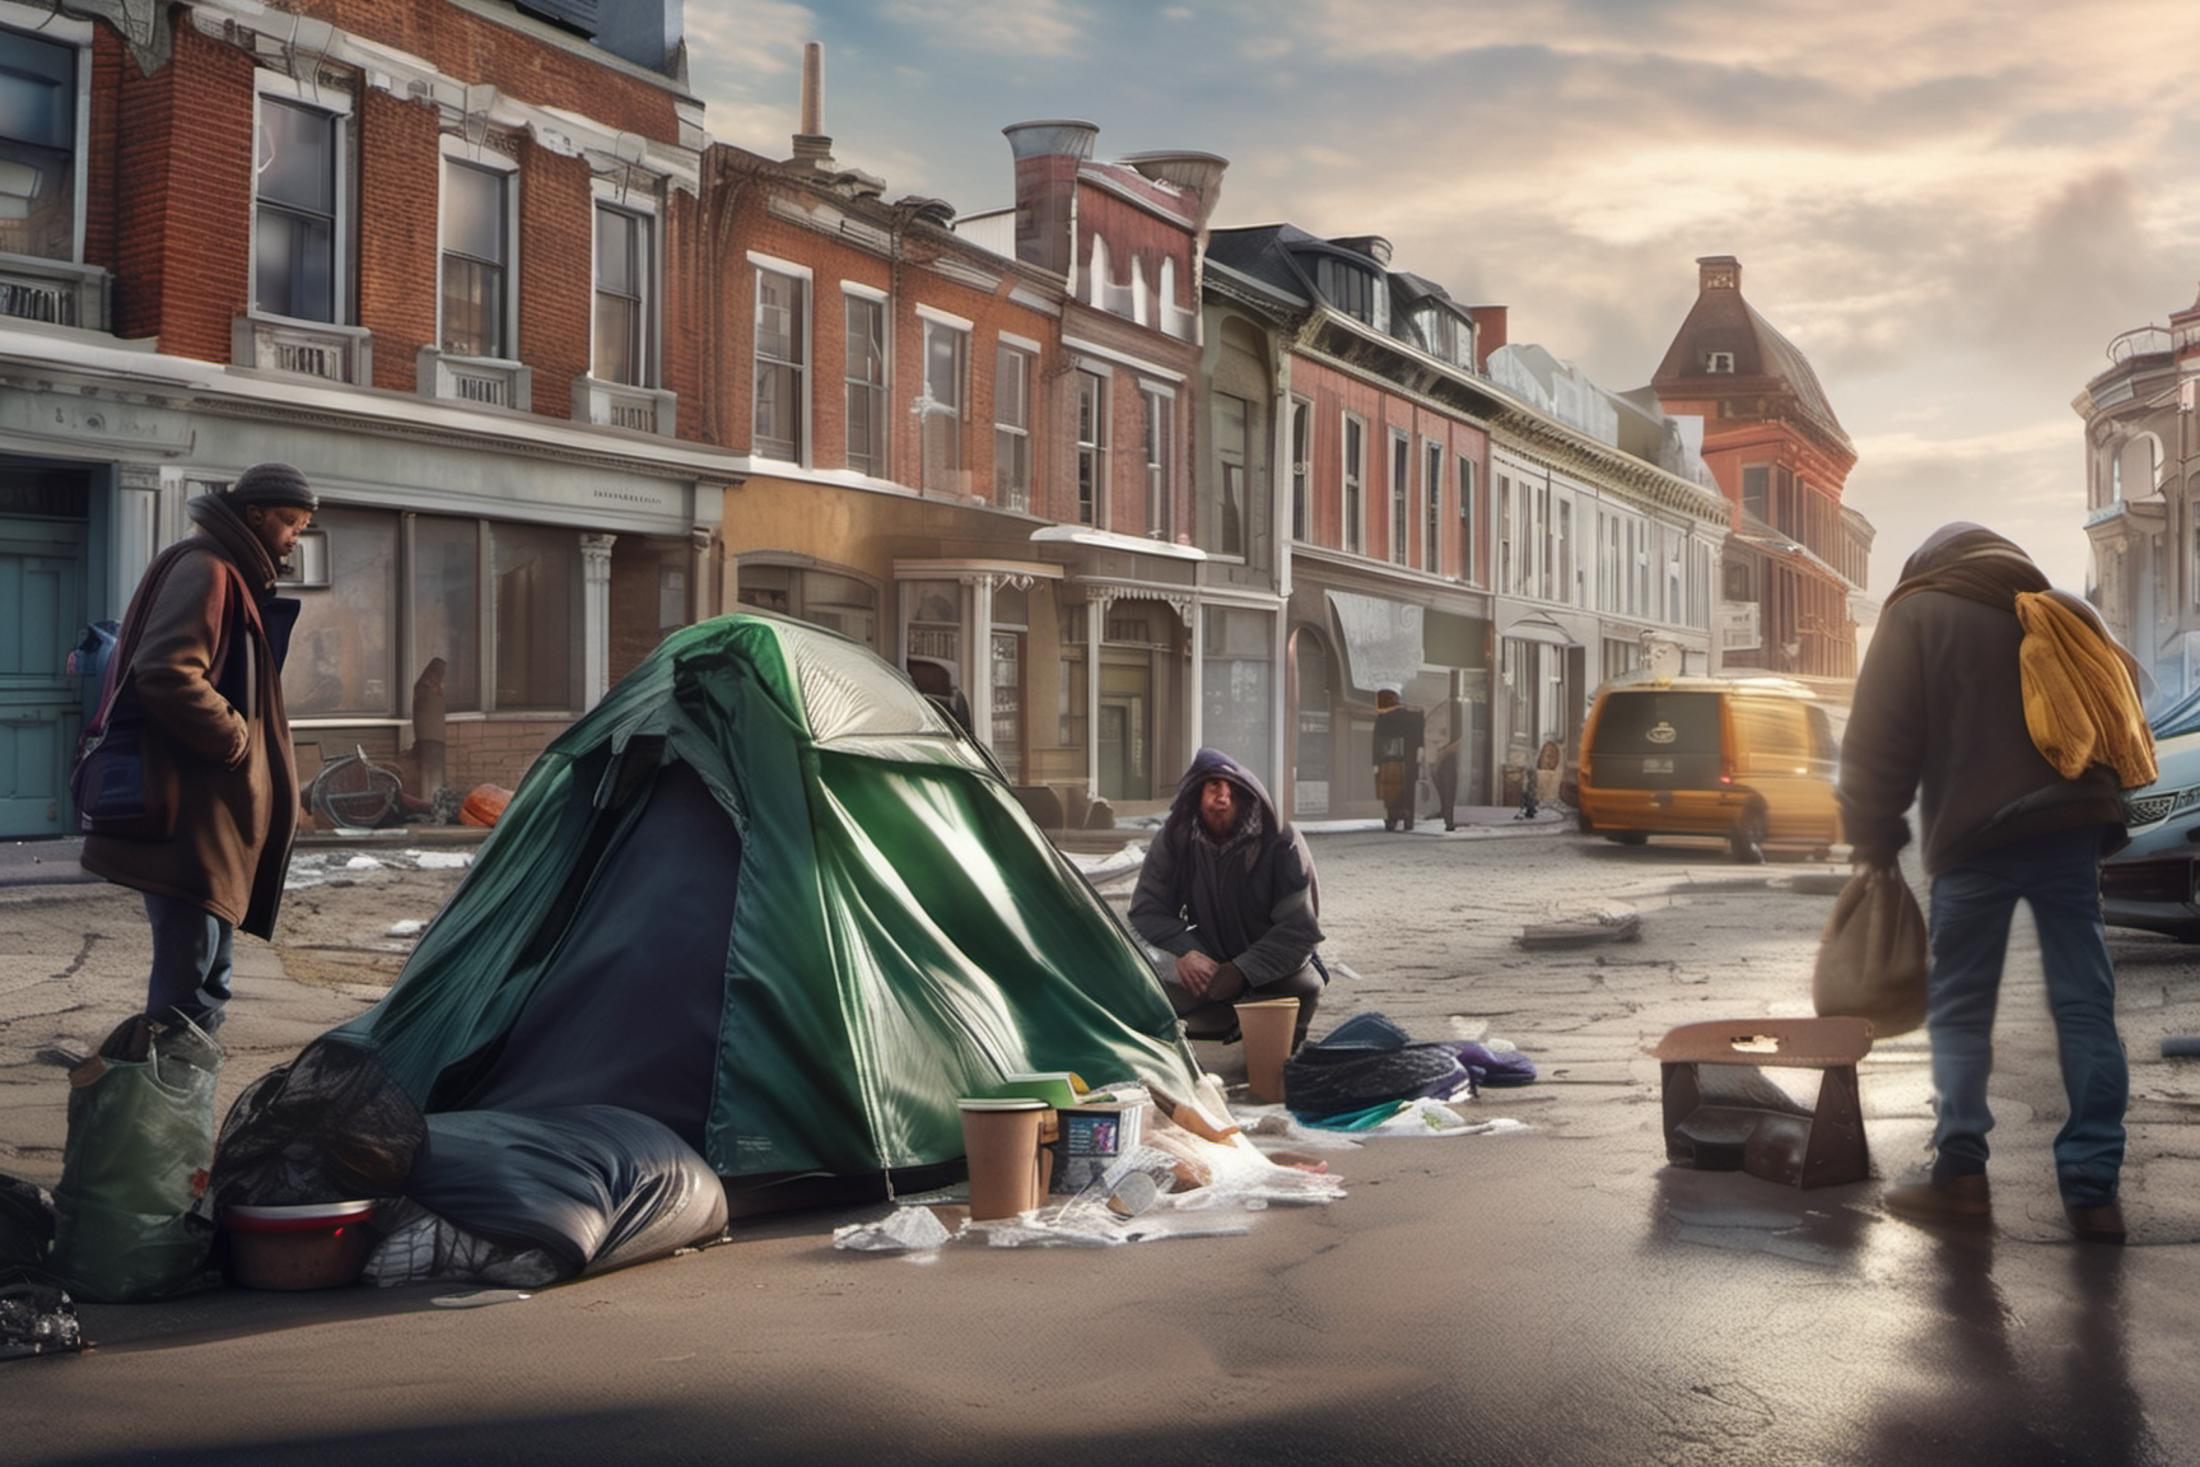 Craig Severance - Homeless In America image by craigindylimotransport169